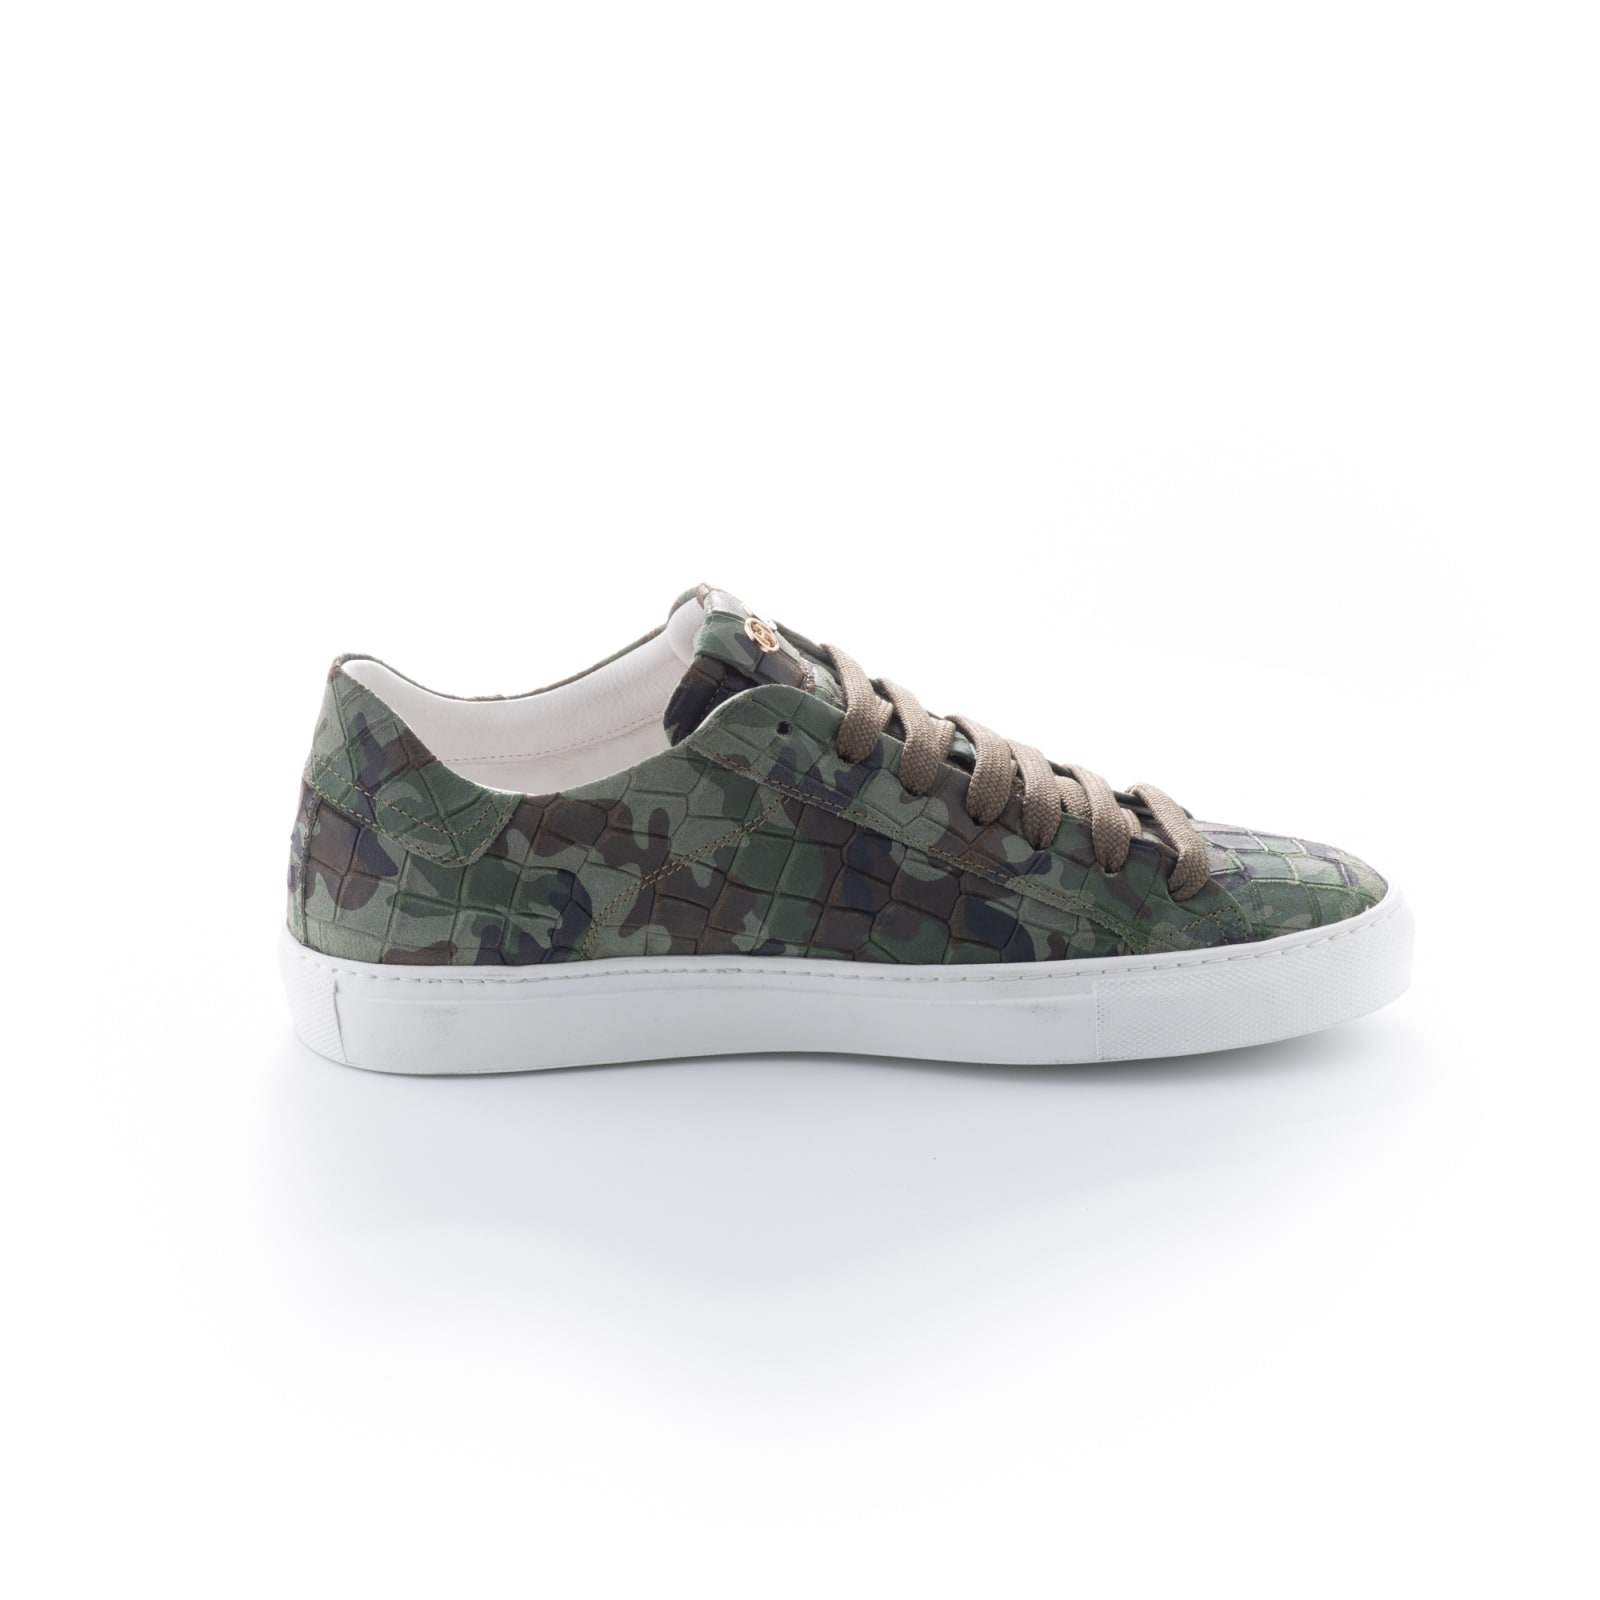 Hide & Jack Essence Croco Camouflage Sneakers